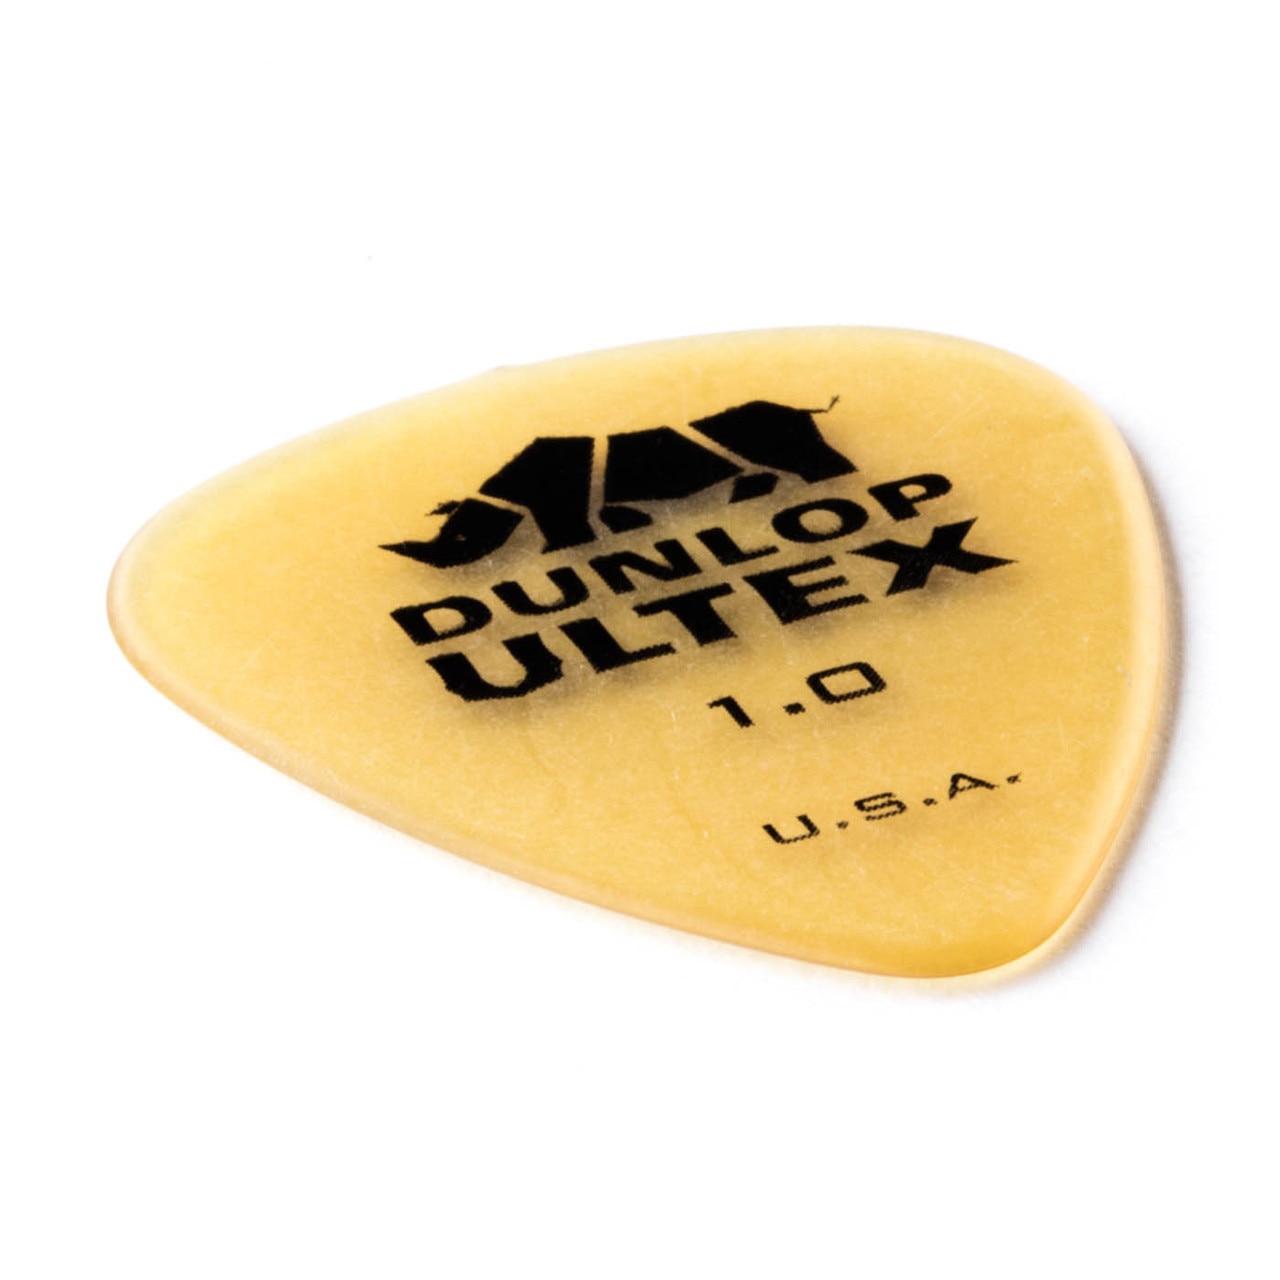 Jim Dunlop Ultex Standard 421 1.00mm - Guitar pick - Variation 1